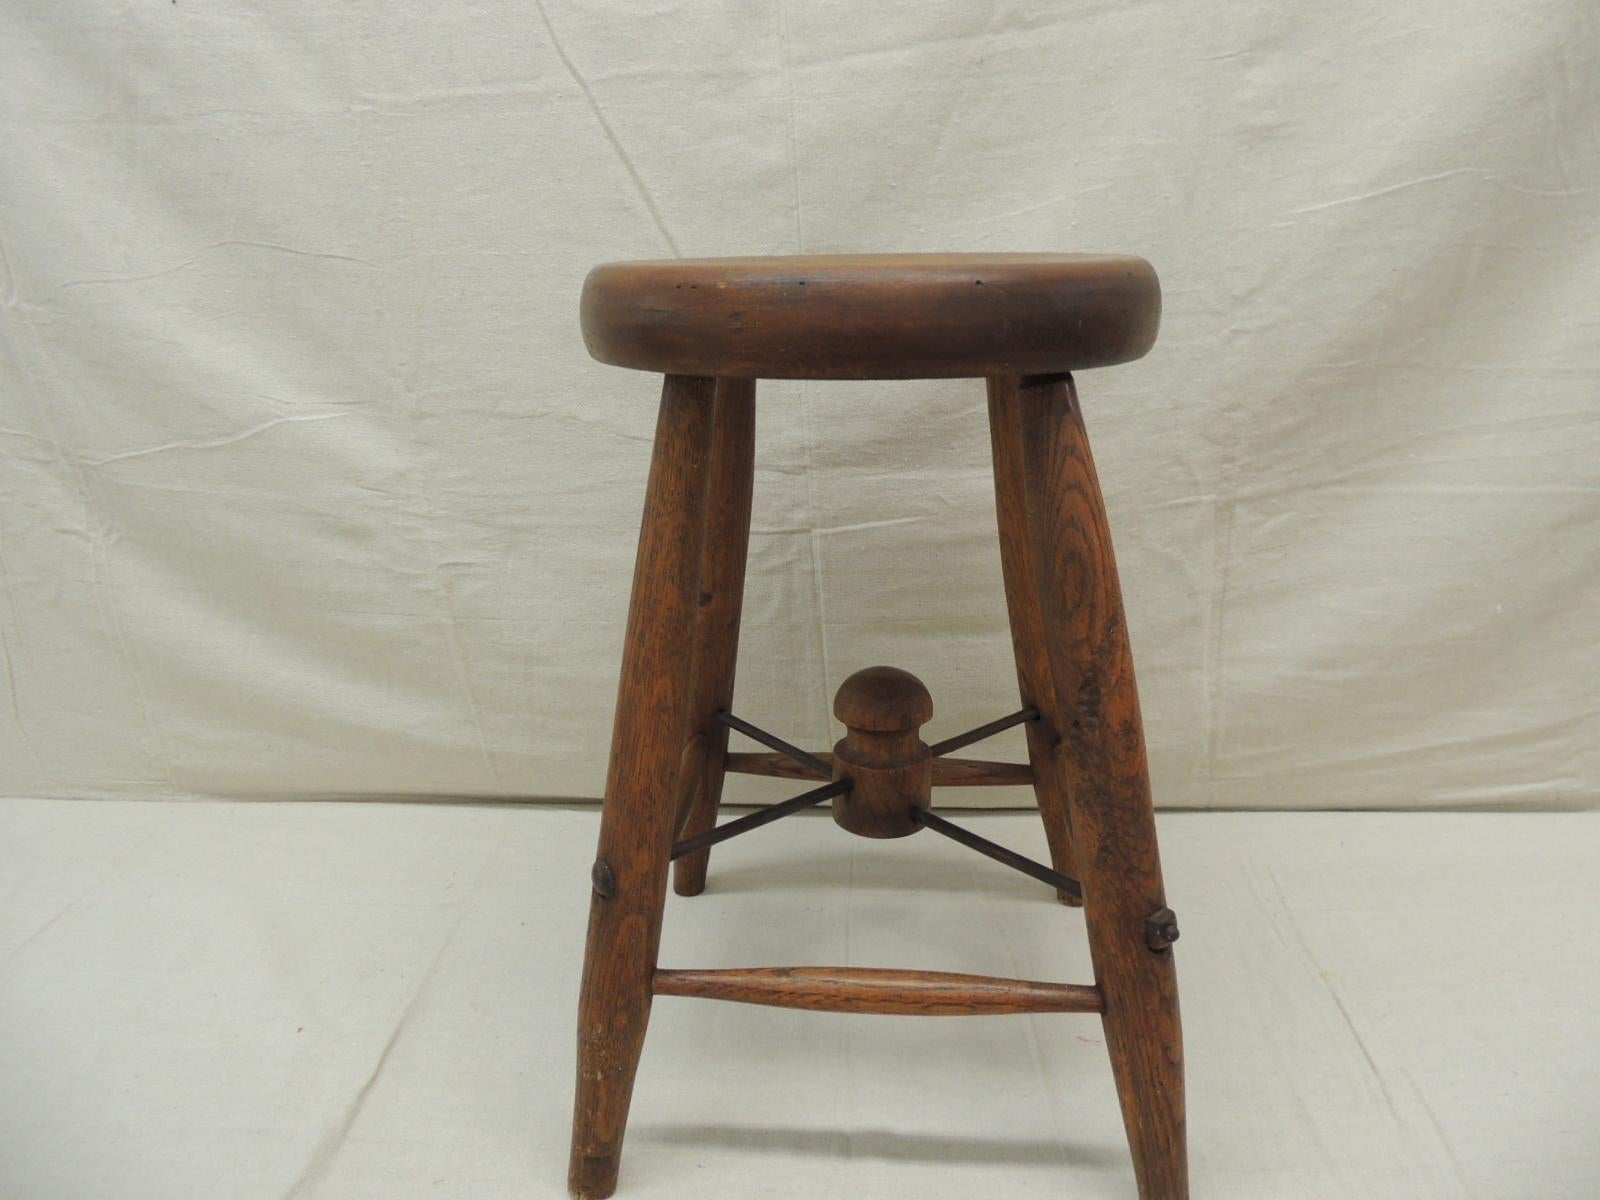 Vintage round wood work bench stool
X long screw rod stretcher. 
Size: 12” W x 12” D x 18” H
11” seat D.